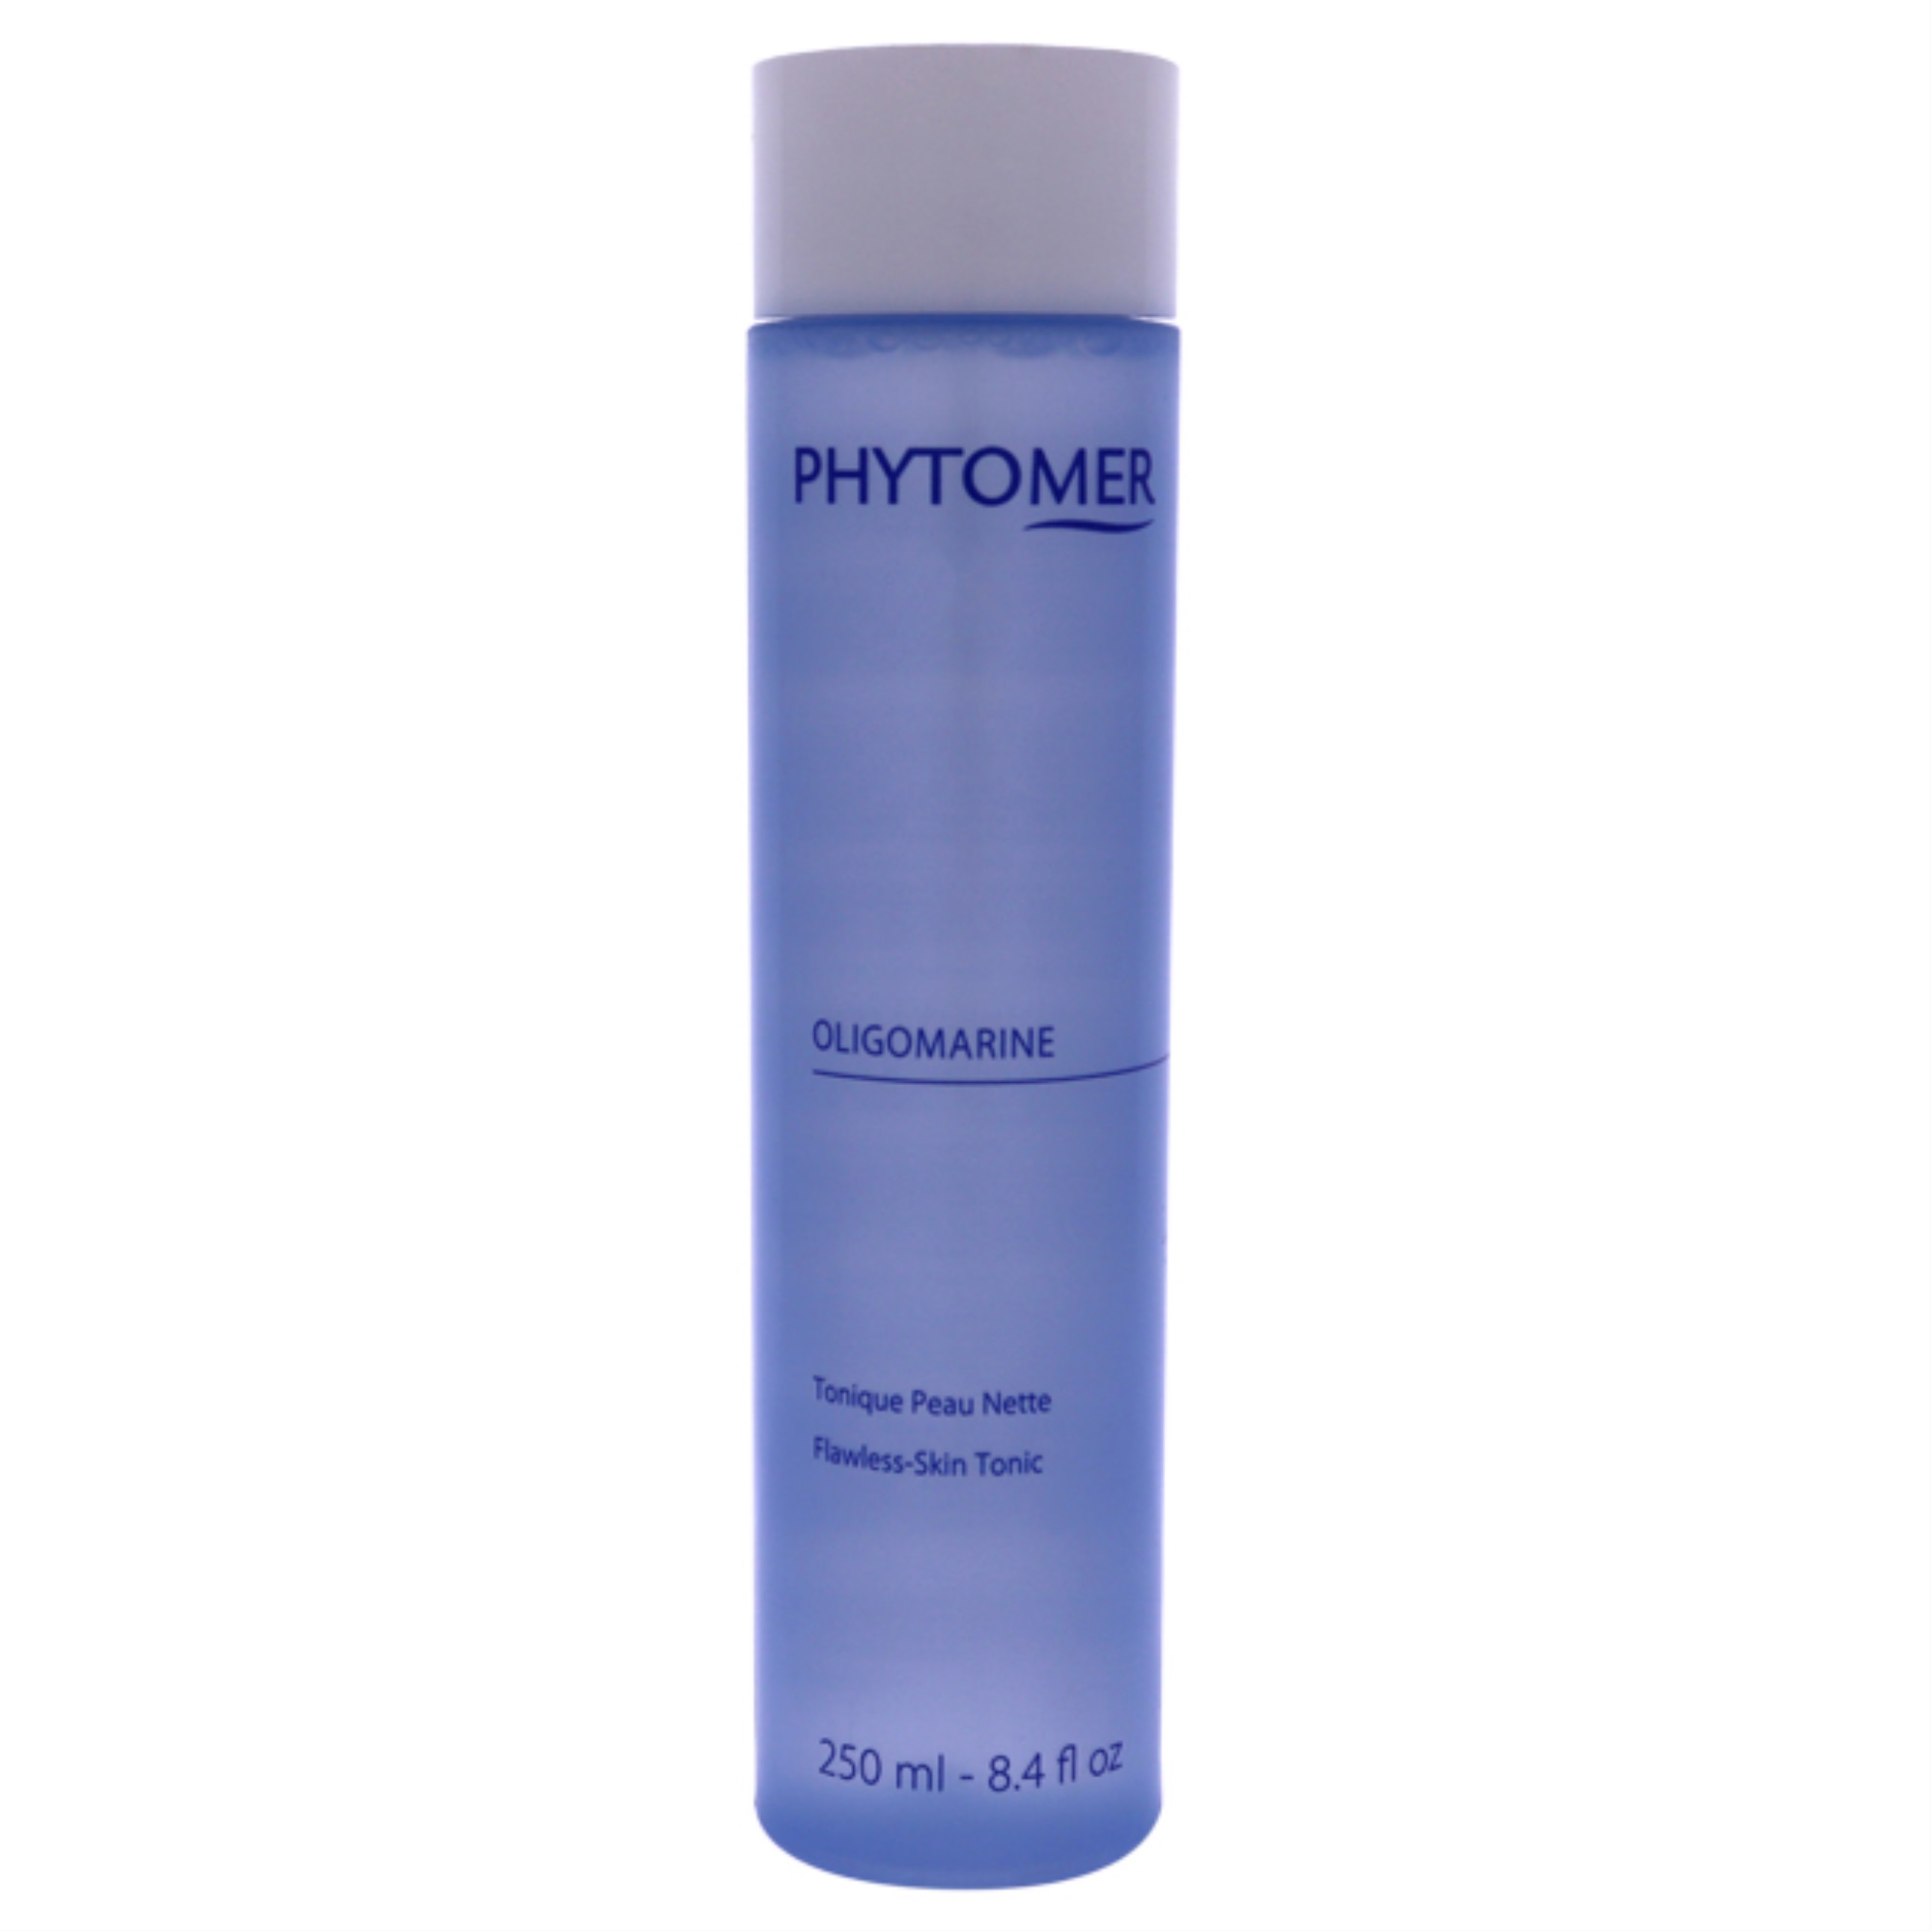 Phytomer Oligomarine Flawless Skin Tonic by Phytomer for Unisex - 8.4 oz Tonic